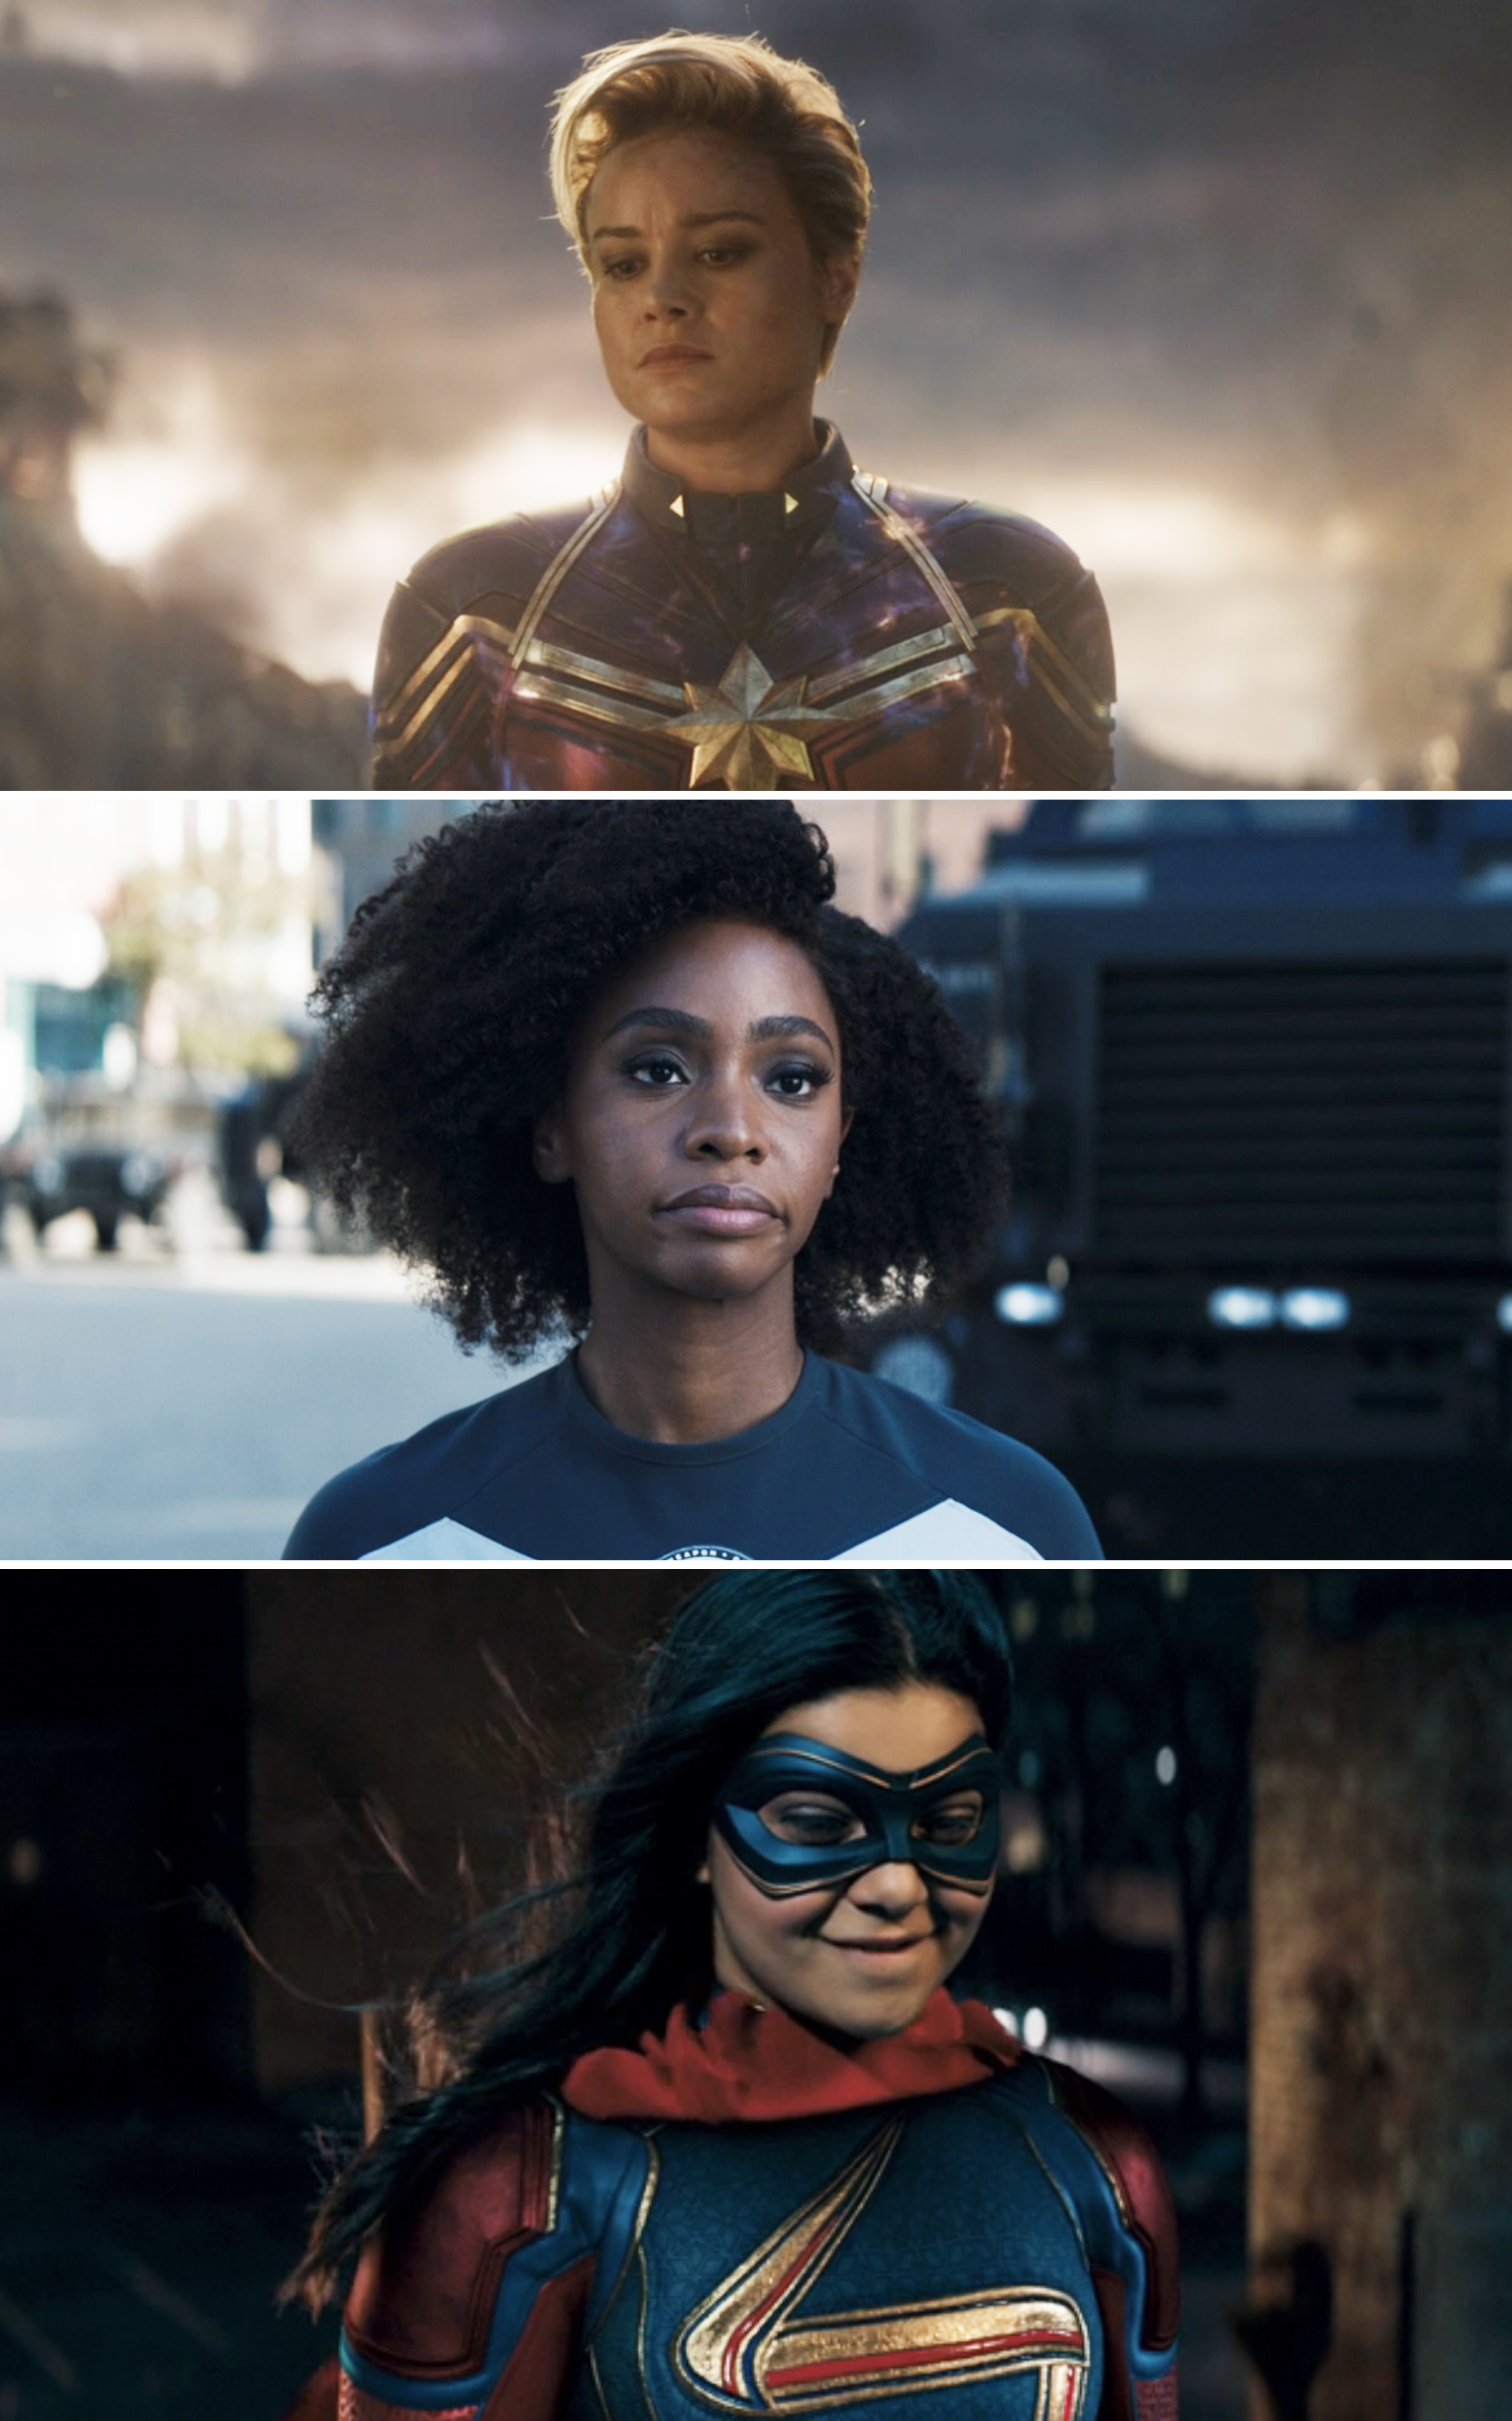 split photos of the 3 superheroes